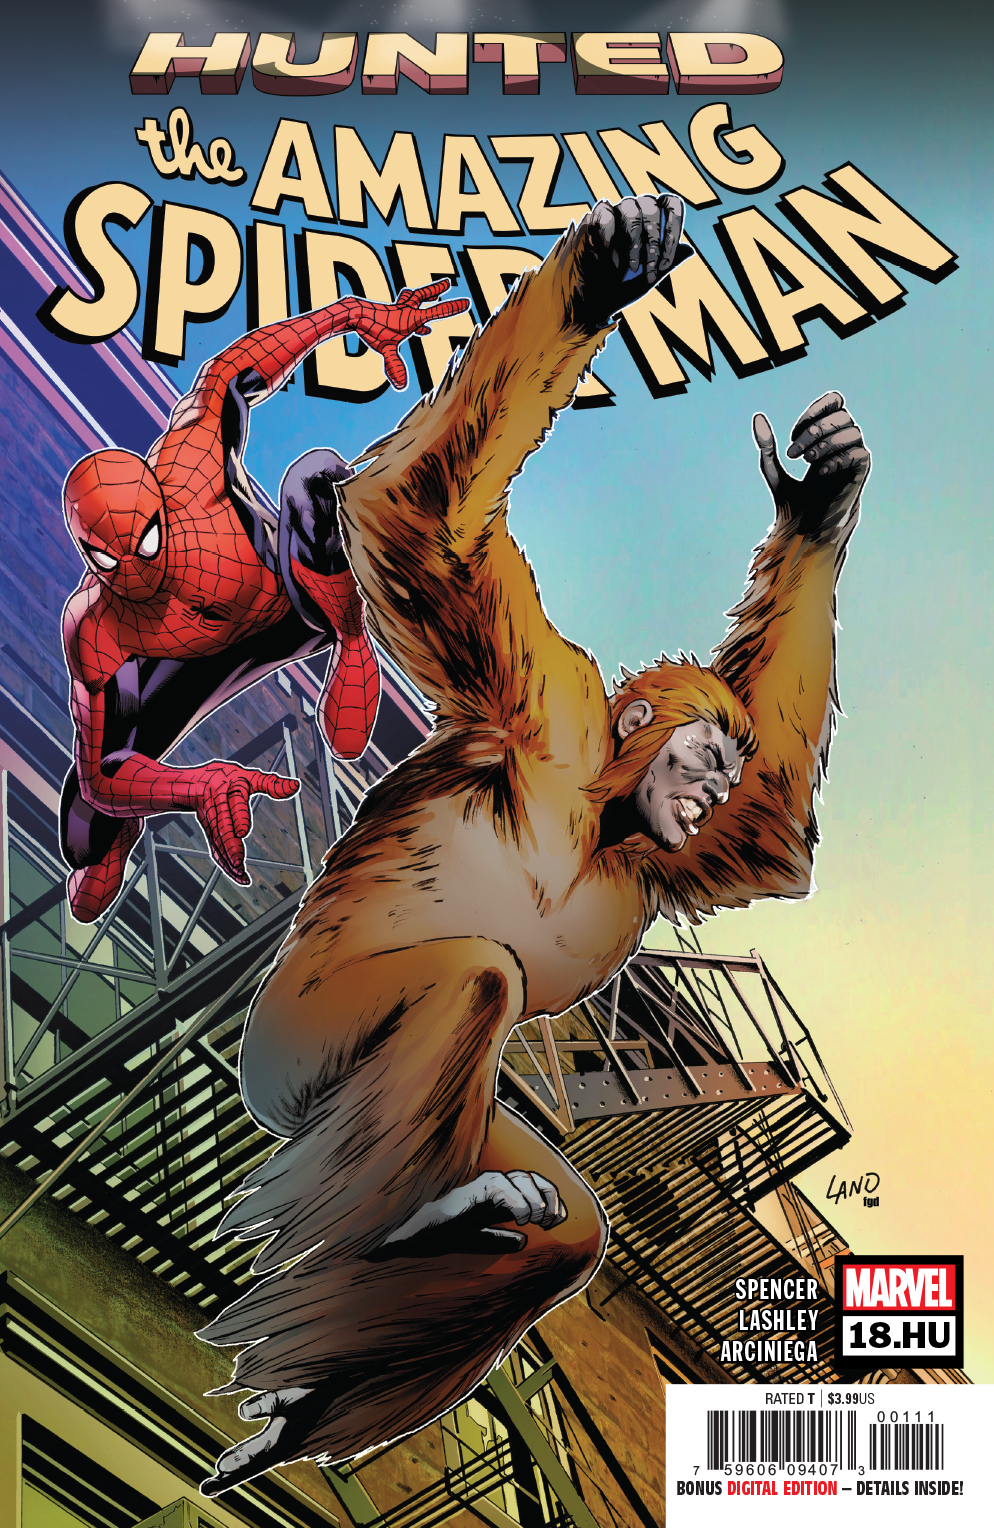 Amazing Spider-Man no. 18.HU (2018 Series)